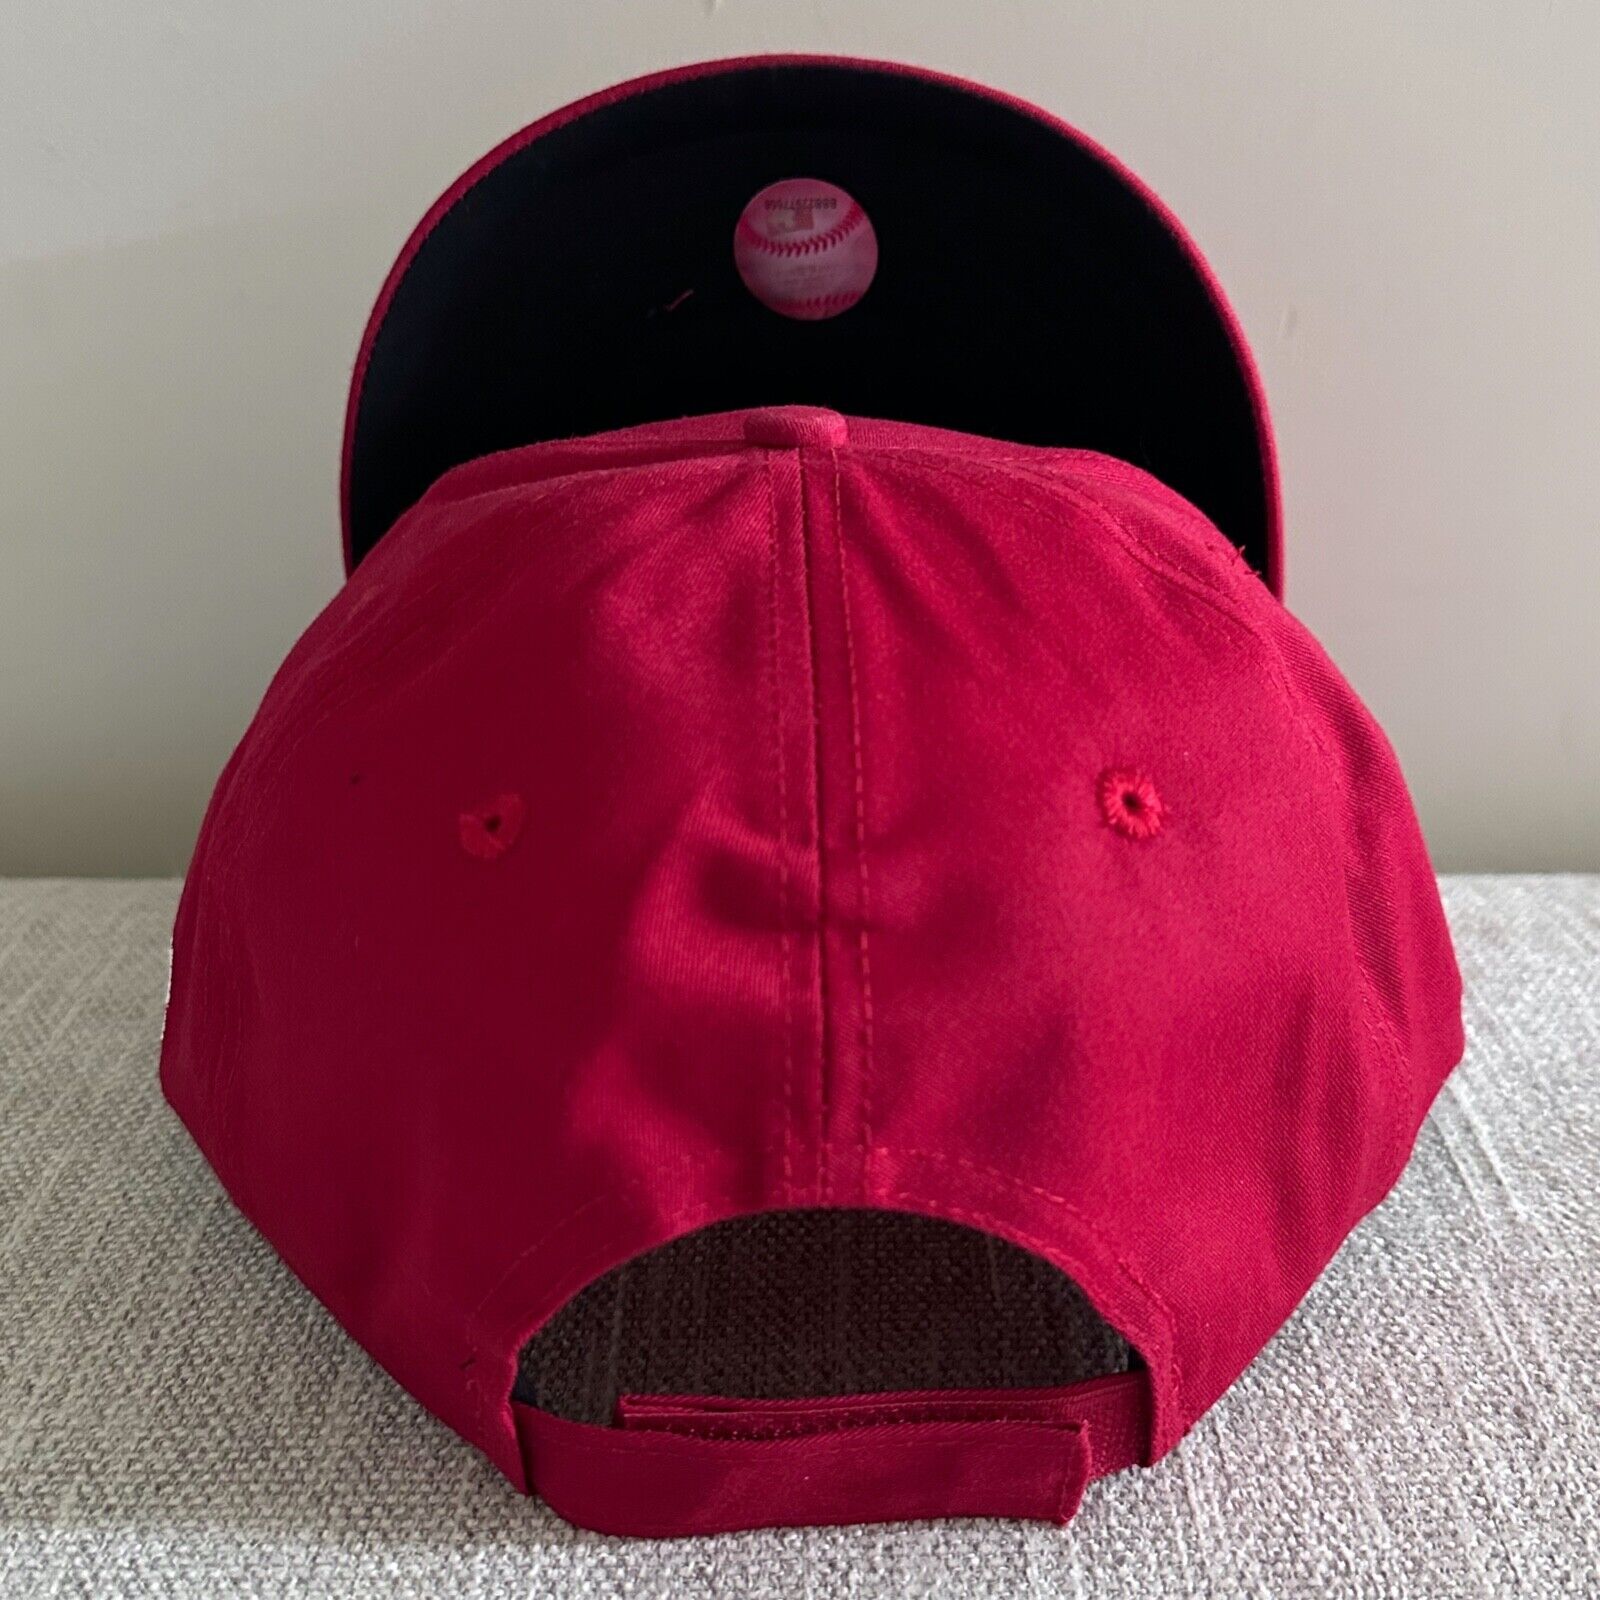 OC Sports Team MLB Adjustable Baseball Hats/Caps, Multiple Teams/Sizes, Discount